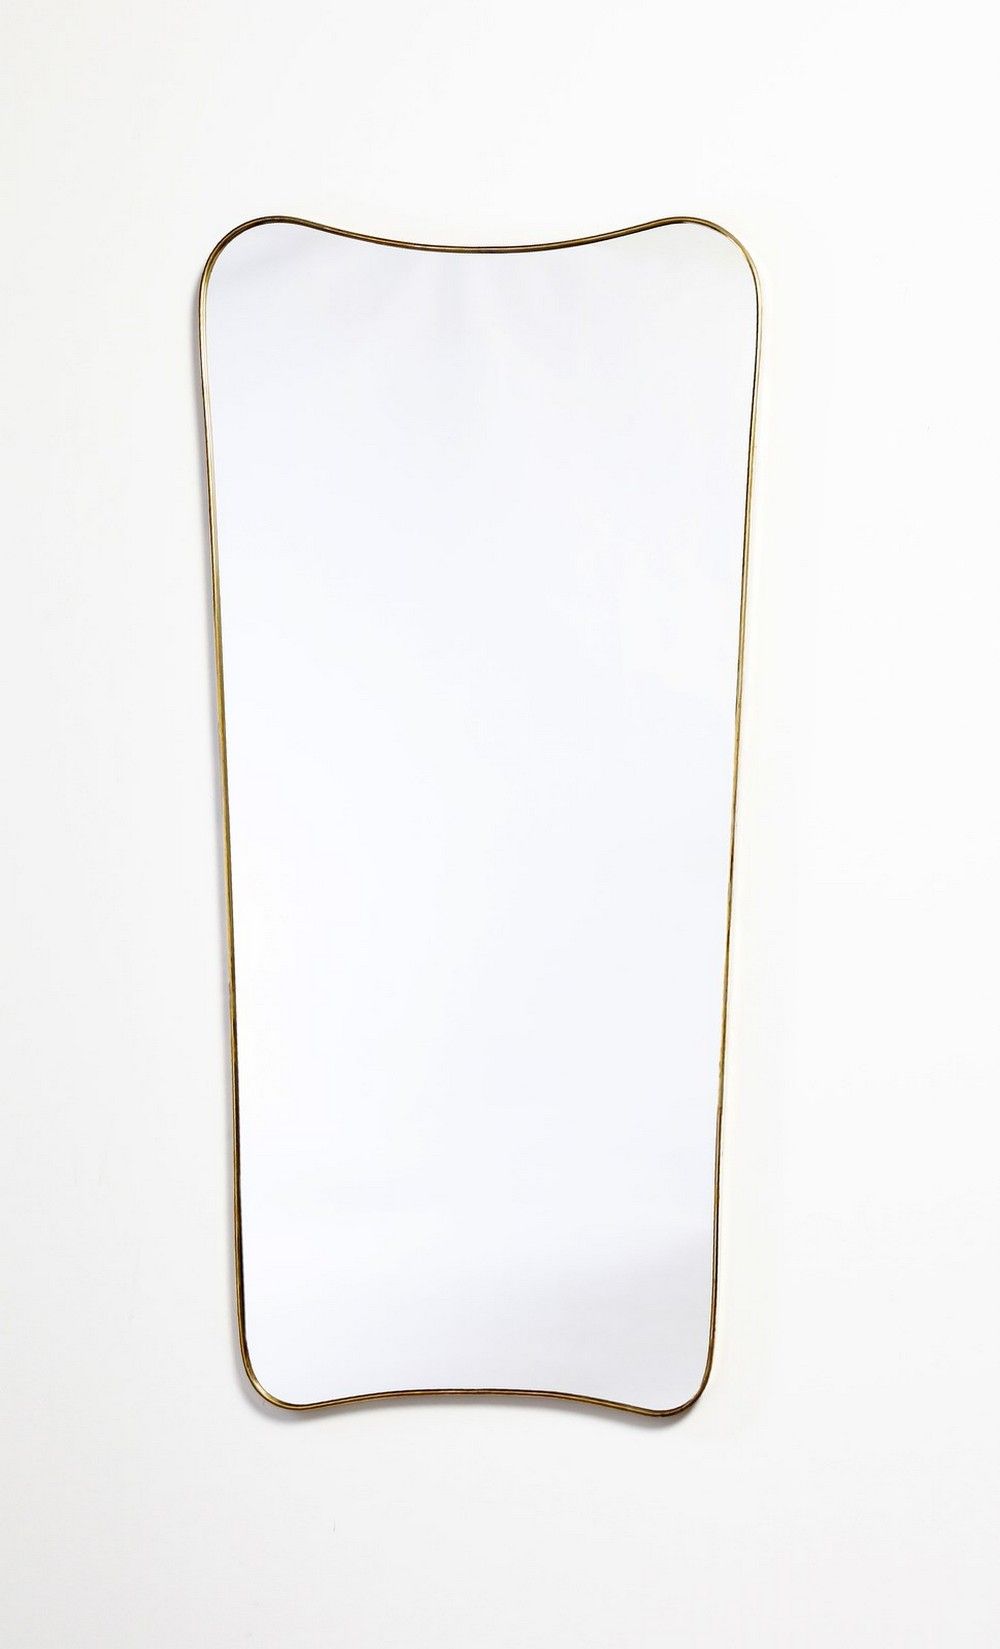 PONTI GIO (1891 - 1979) GIO的归属。镜子。黄铜和镜子。Cm 70,00 x 147,00. 1950年代。